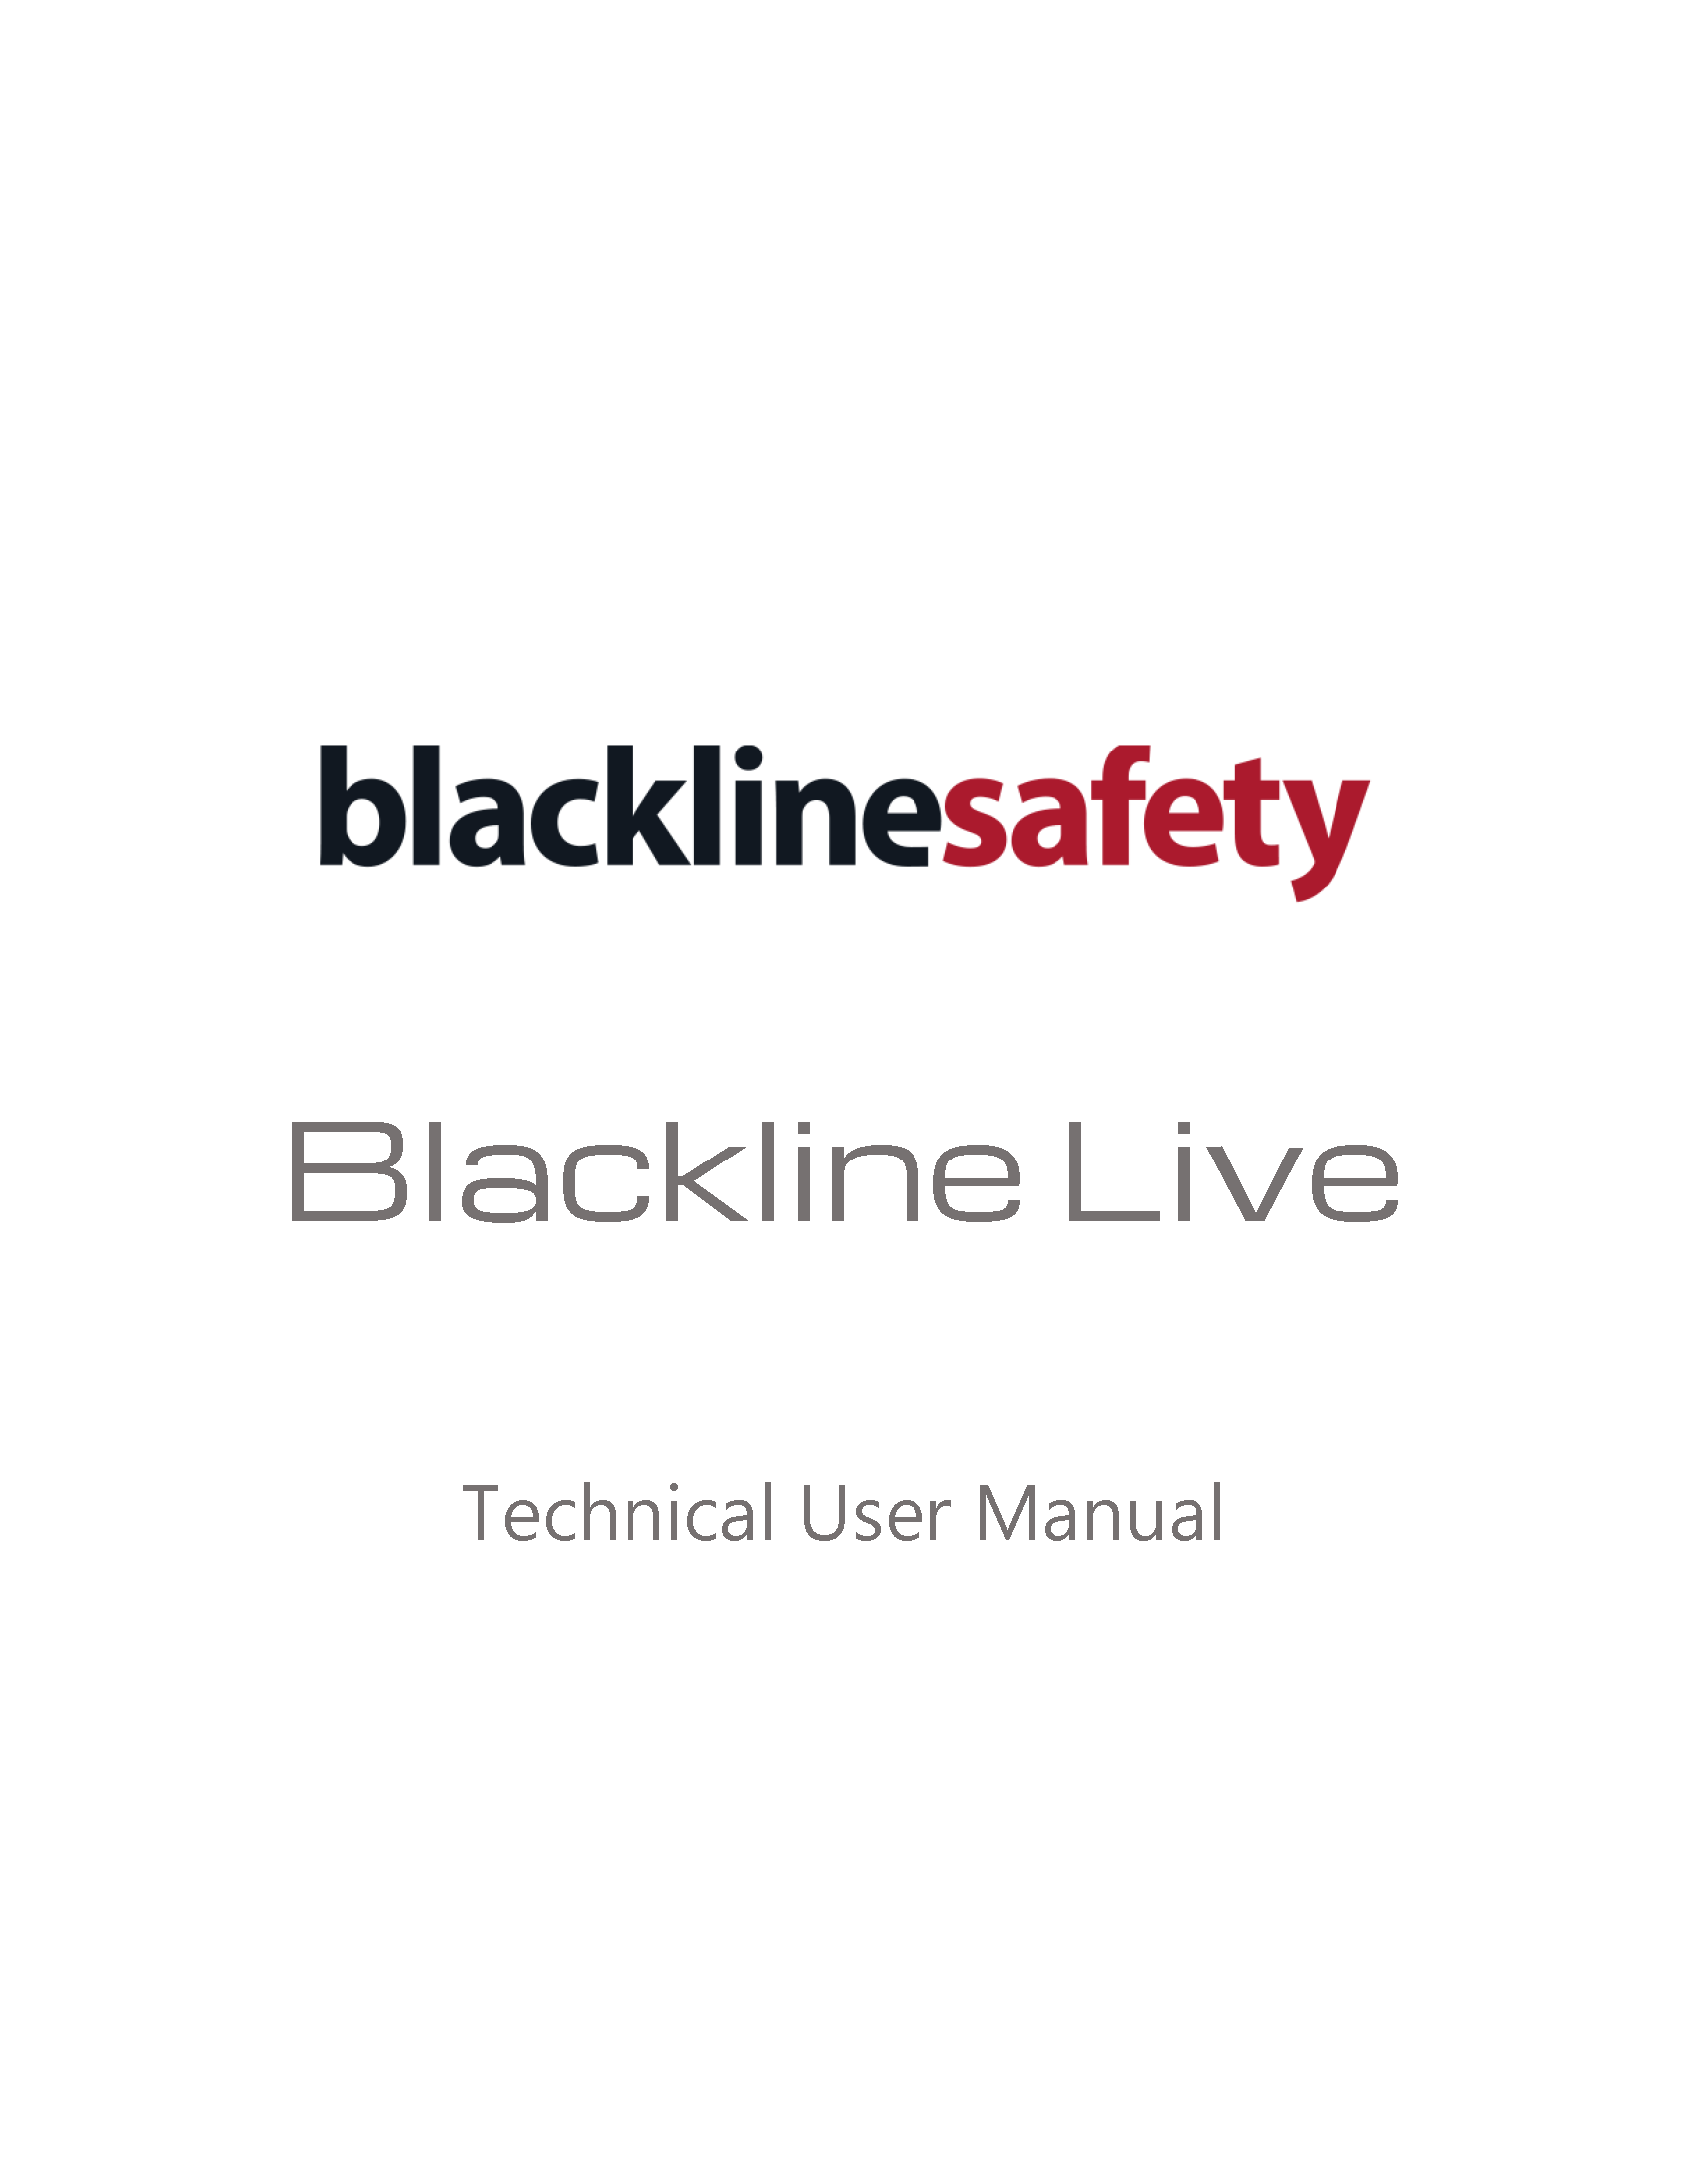 Blackline Live Technical User Manual Cover